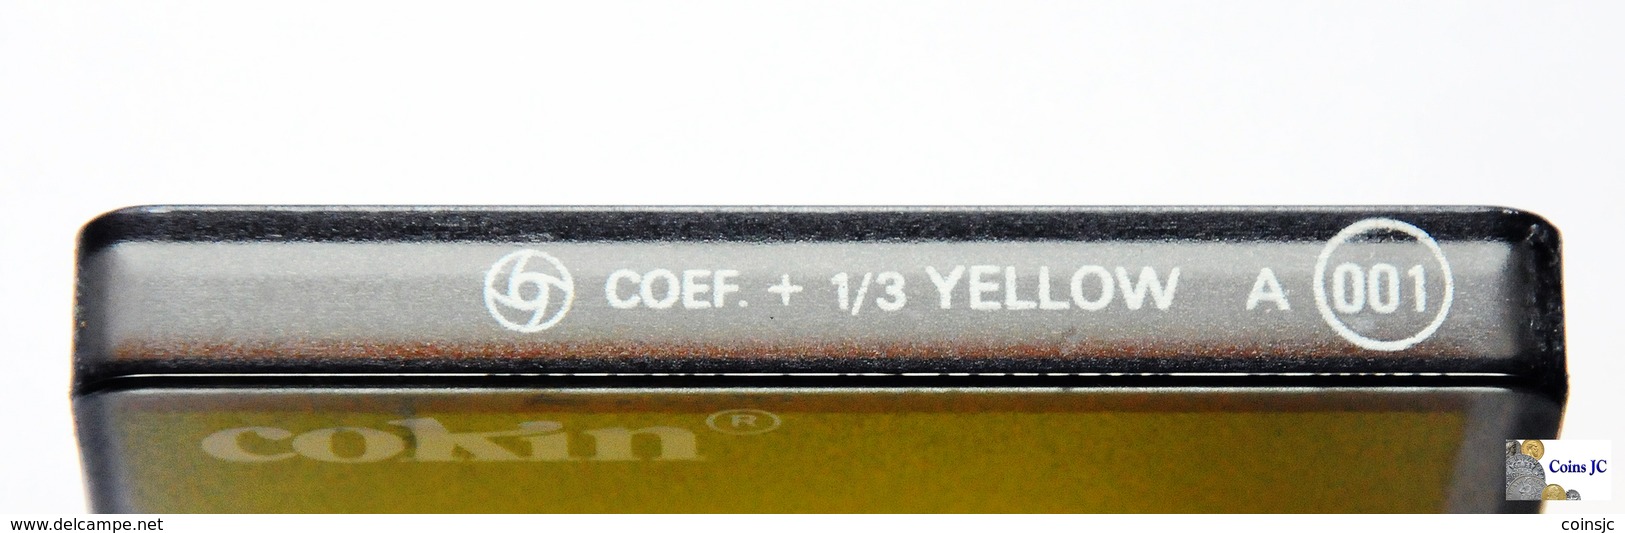 Filter - Yellow A 001 - Cokin - Material Y Accesorios